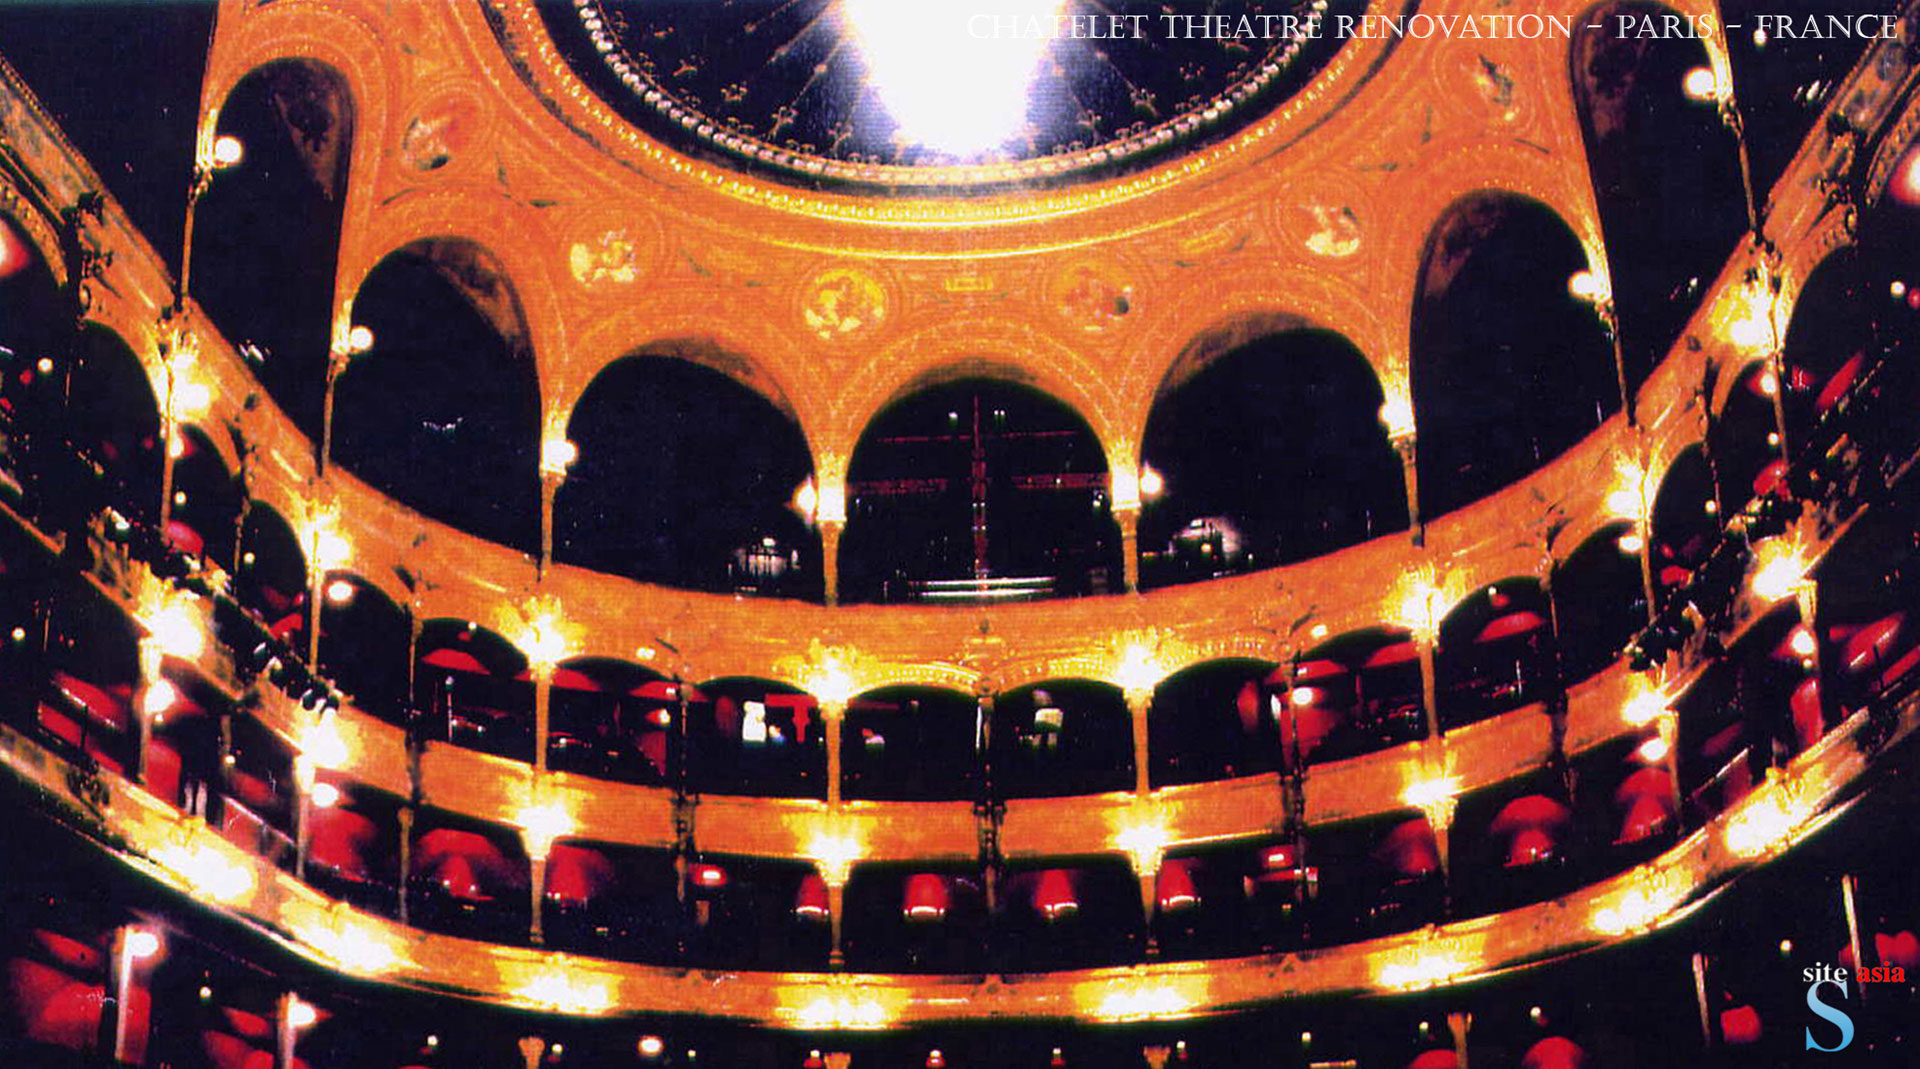 Chatelet Theater renovation, Paris, France